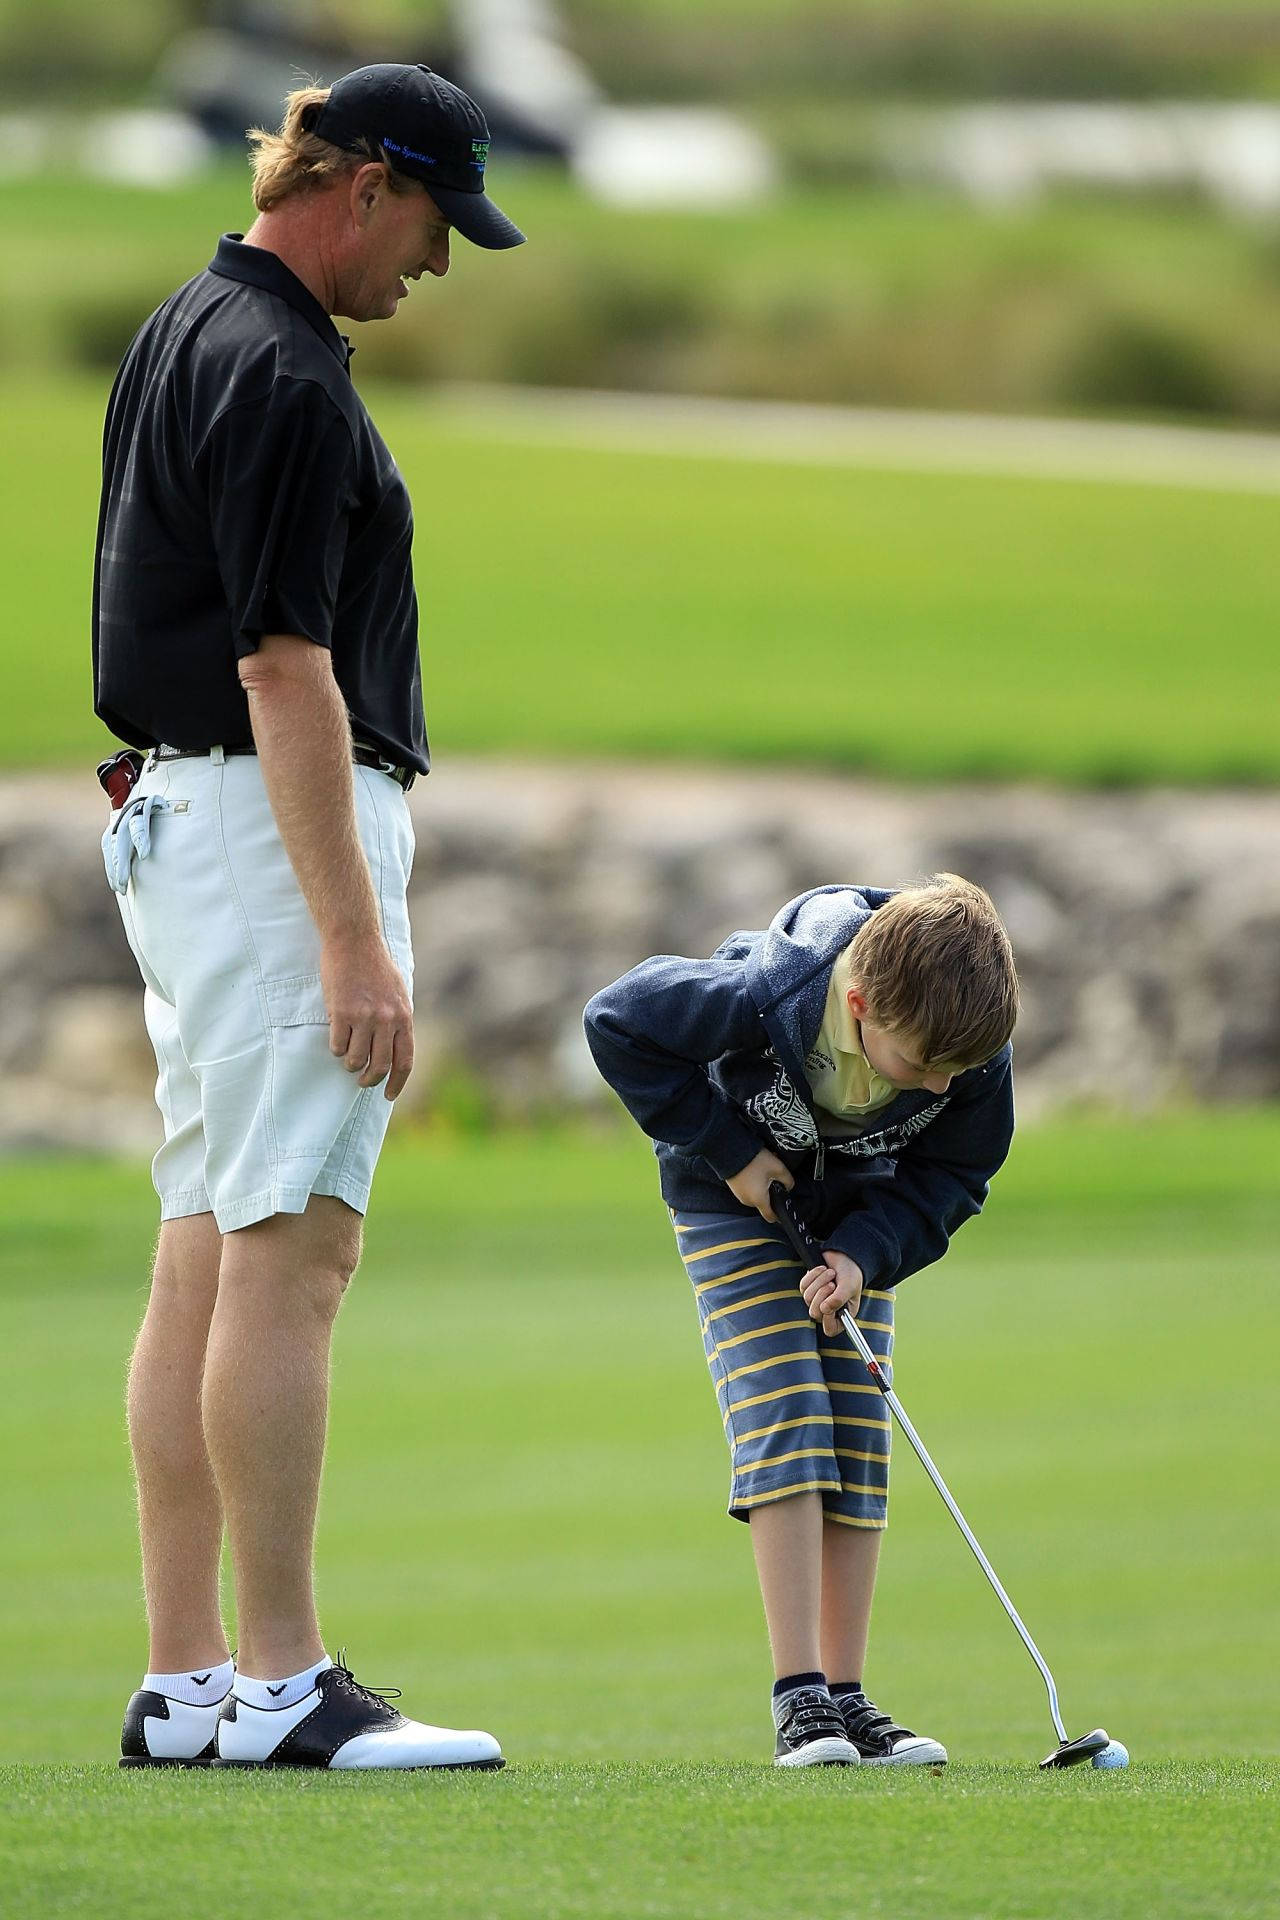 Ernieels A Giocare A Golf Con Un Bambino Sfondo